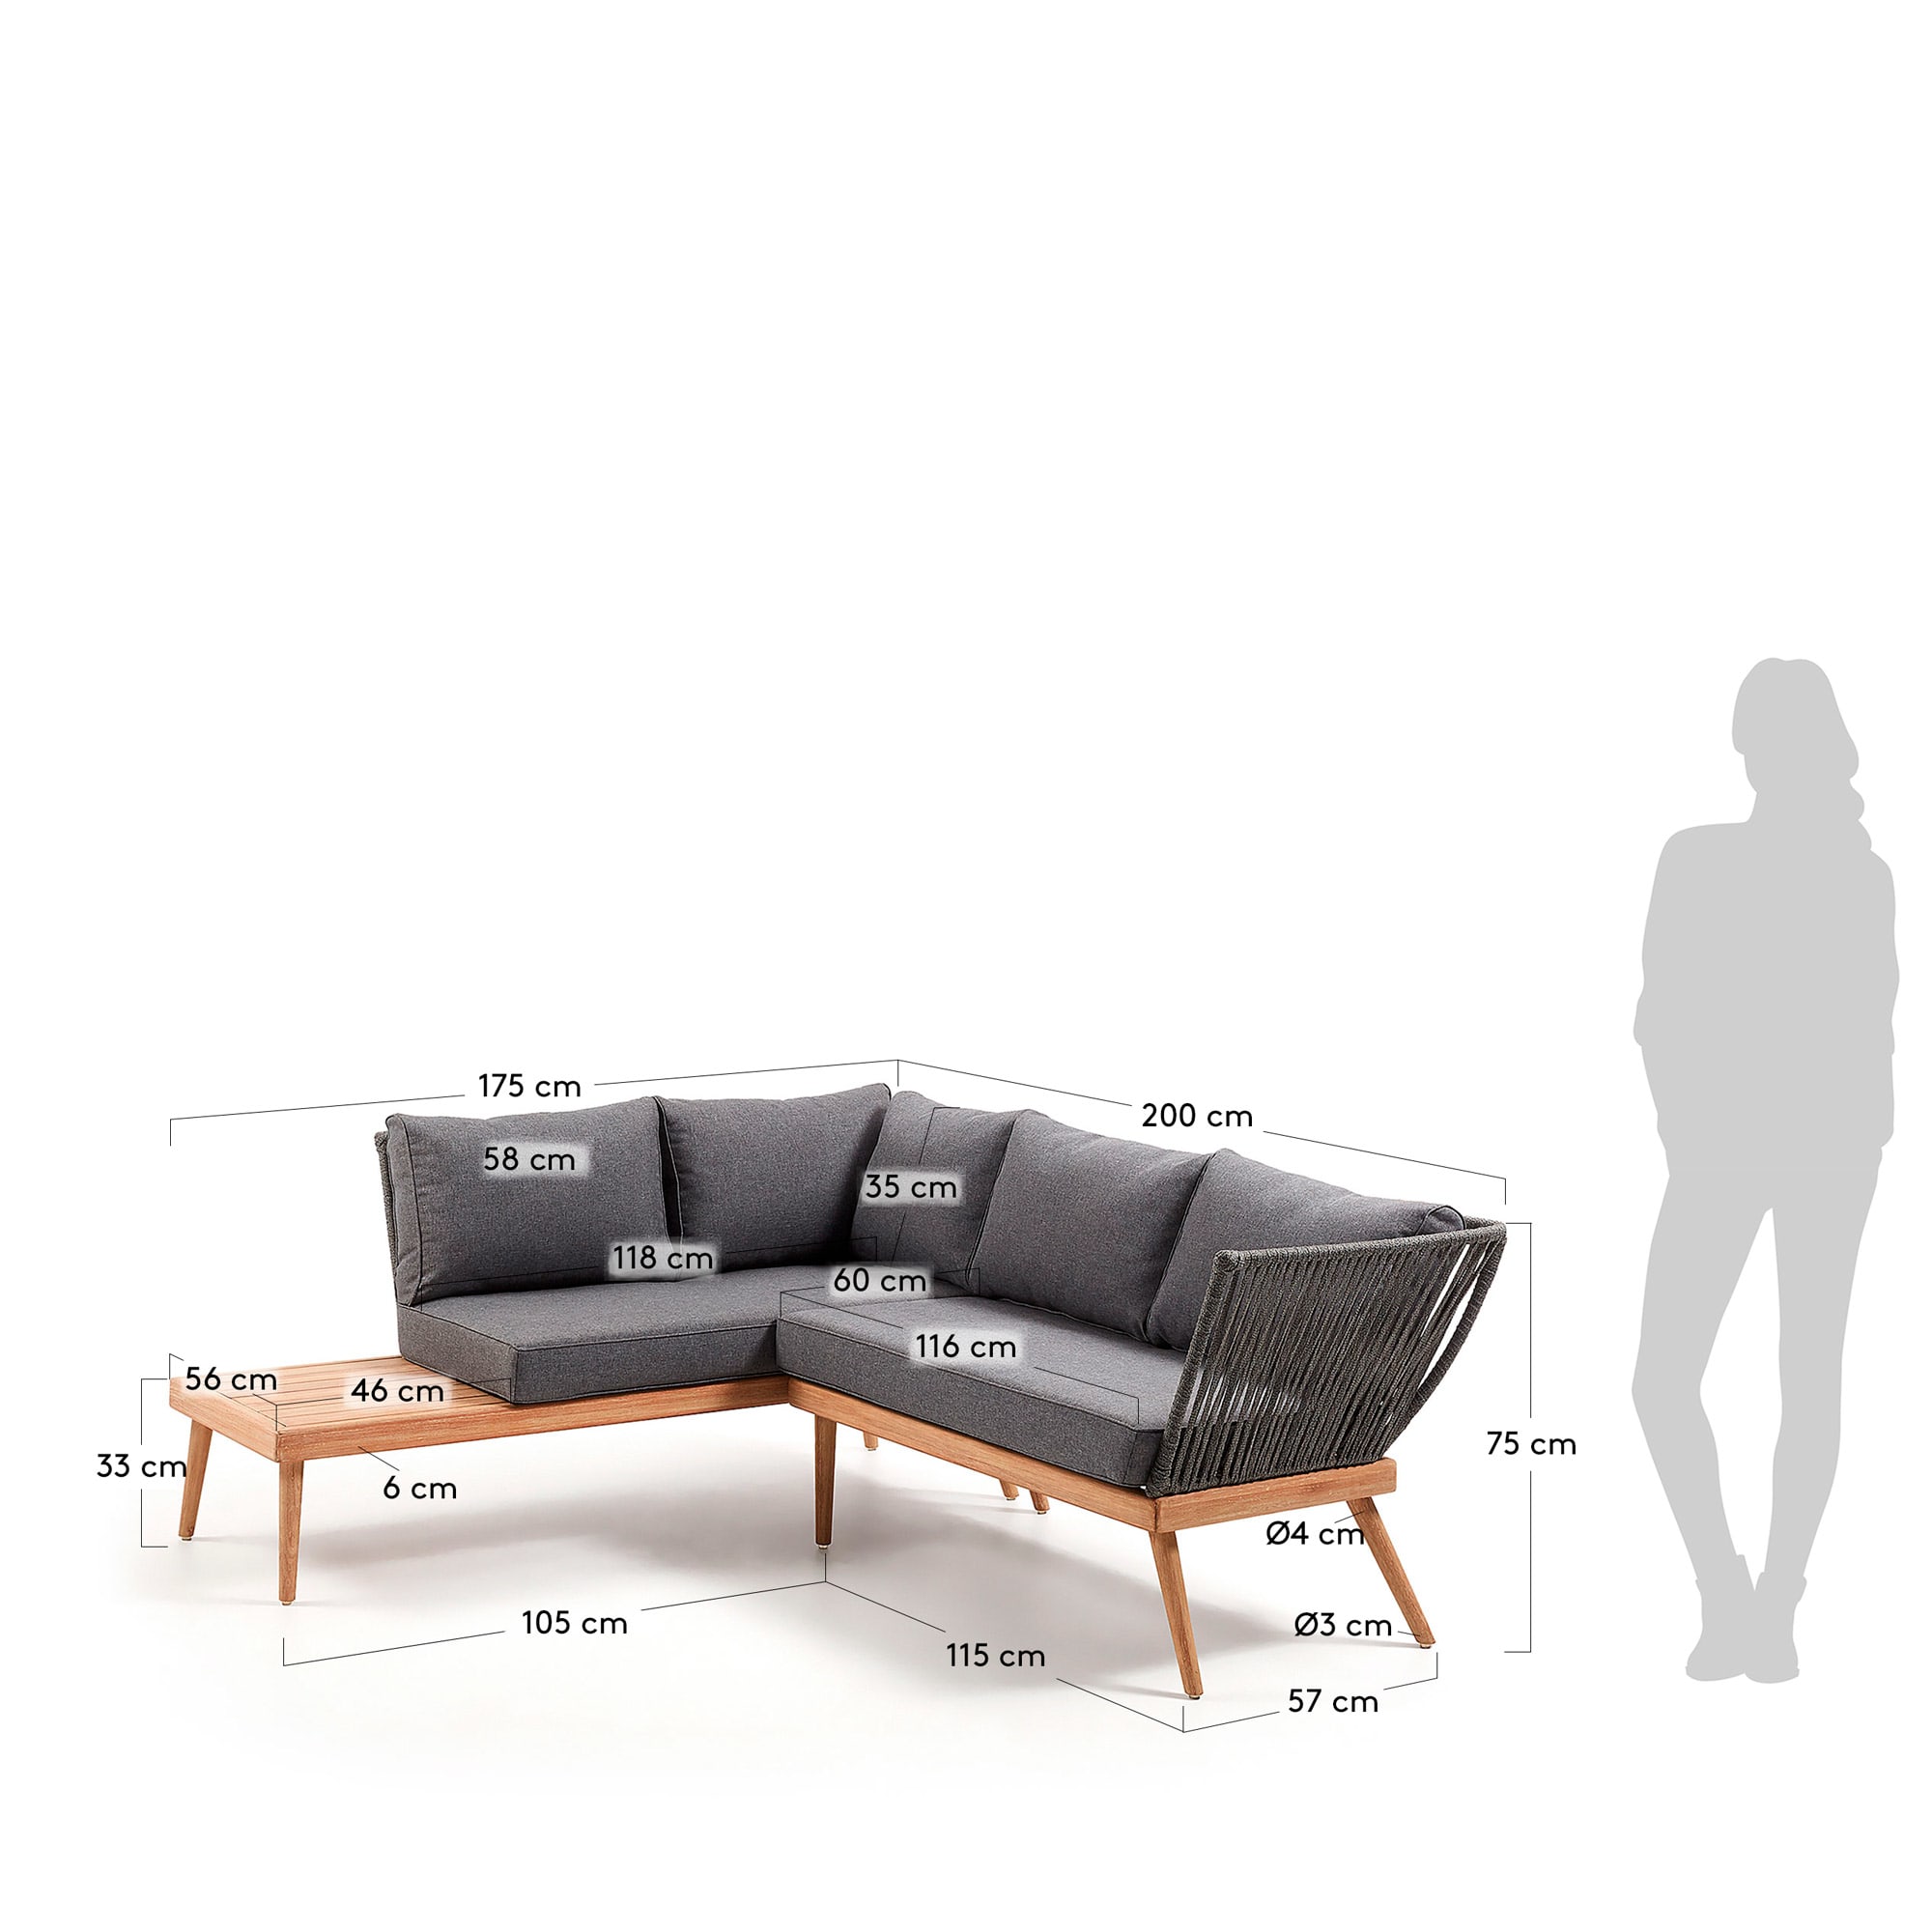 Ramson 4-seater corner sofa in solid eucalyptus with beige cord 200 cm - sizes